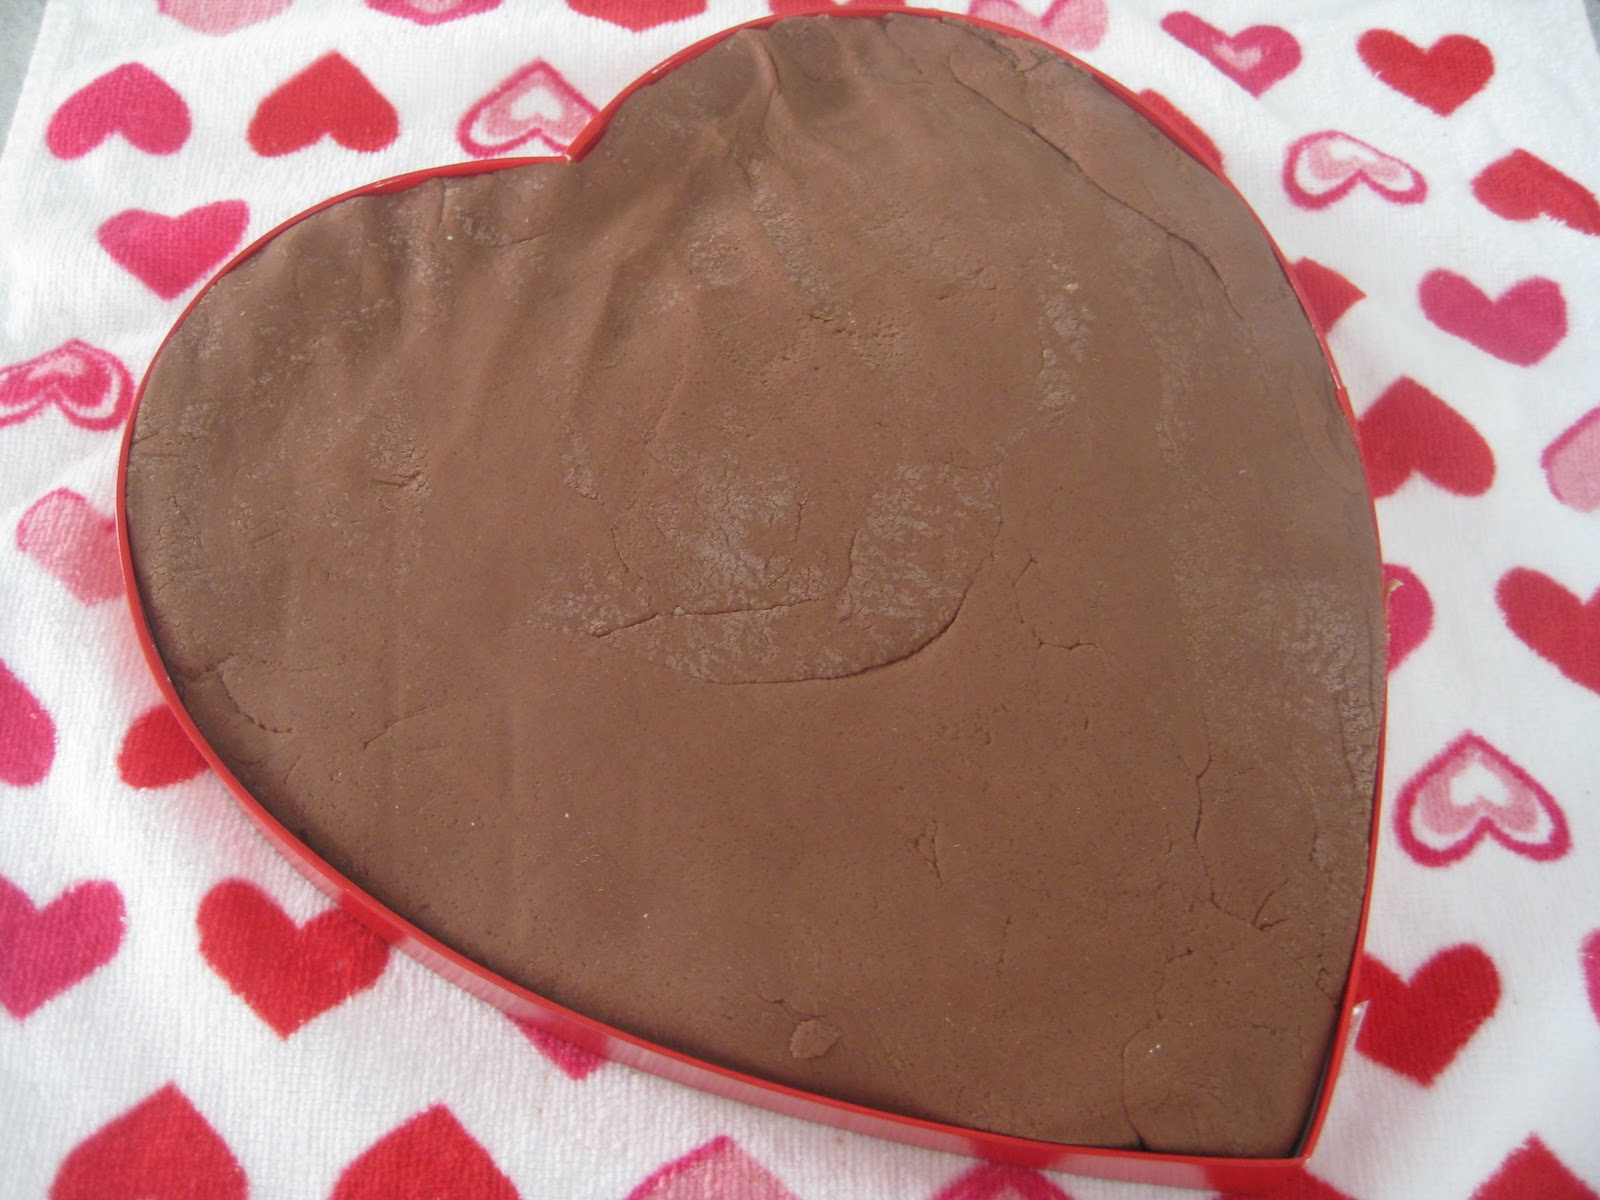 Chocolate Playdough - Recipe from Price Chopper